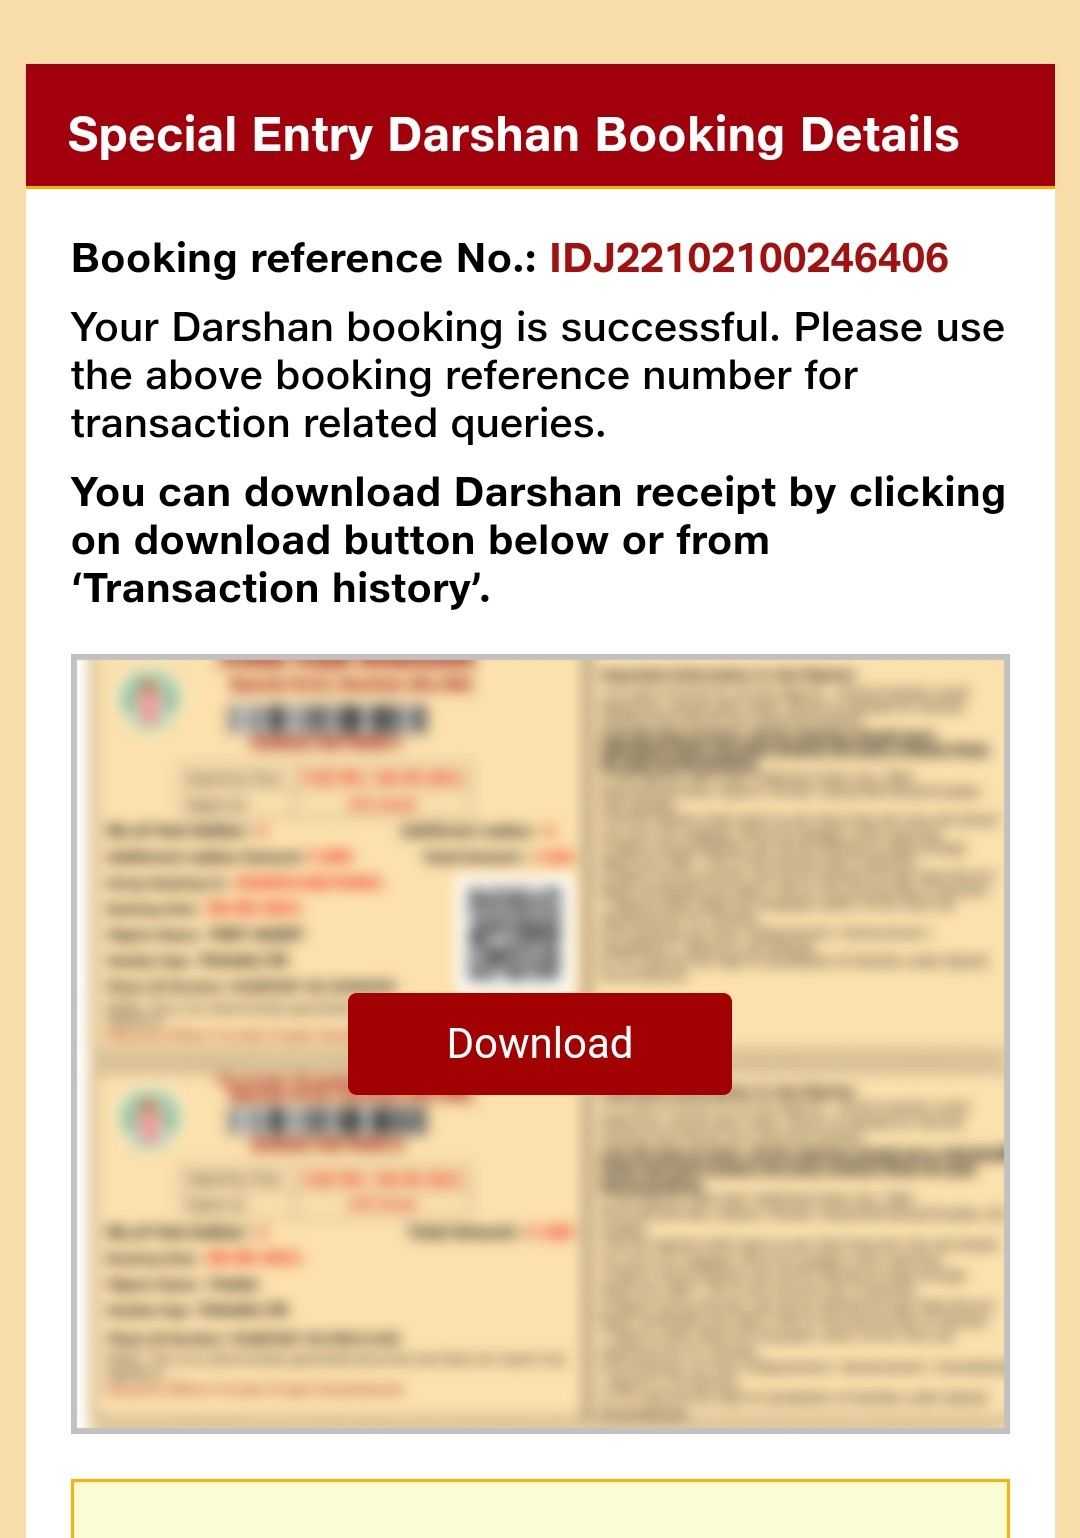 Download darshan ticket